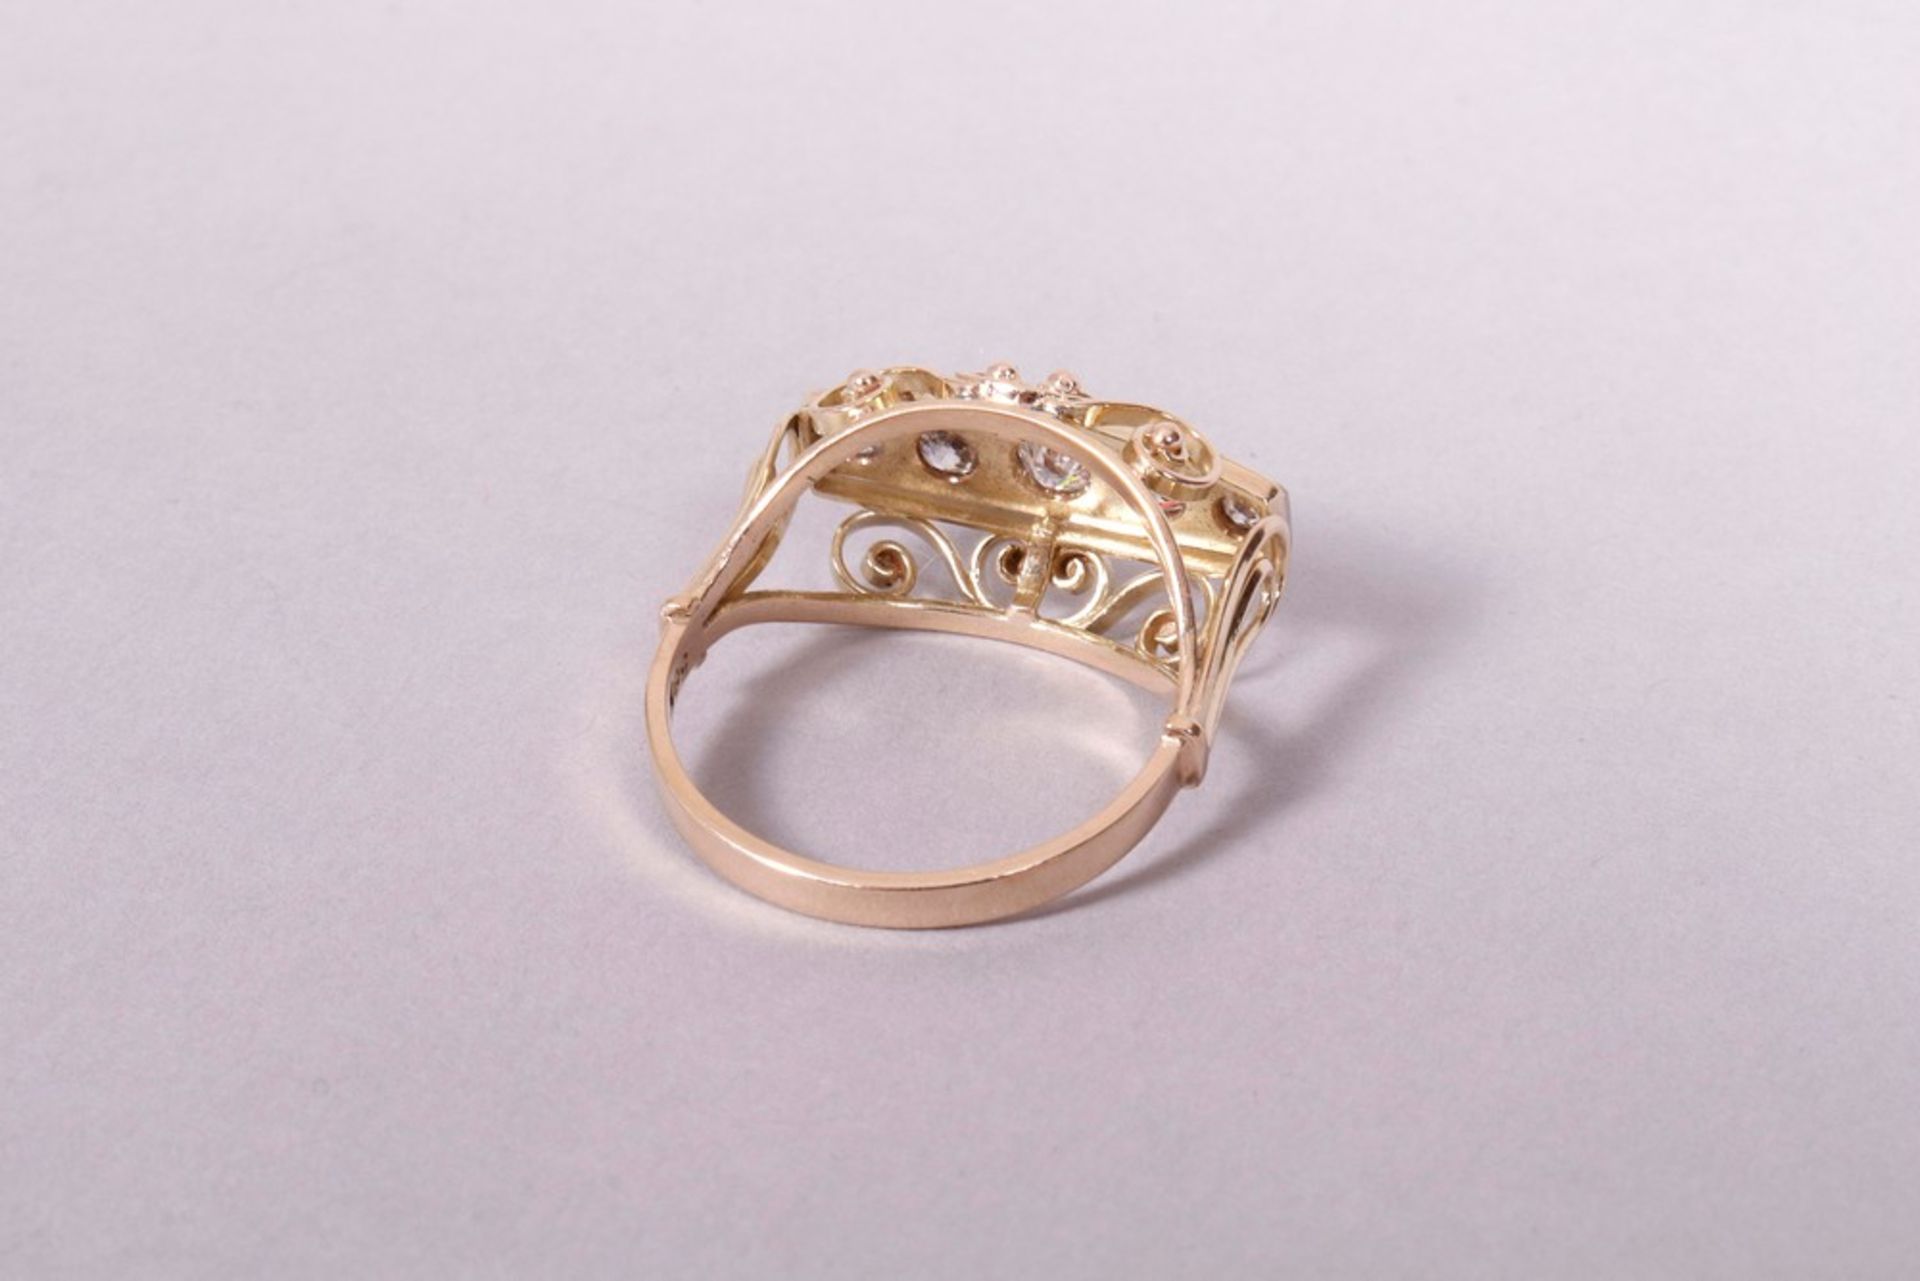 Art Nouveau ring, 585 gold - Image 4 of 5